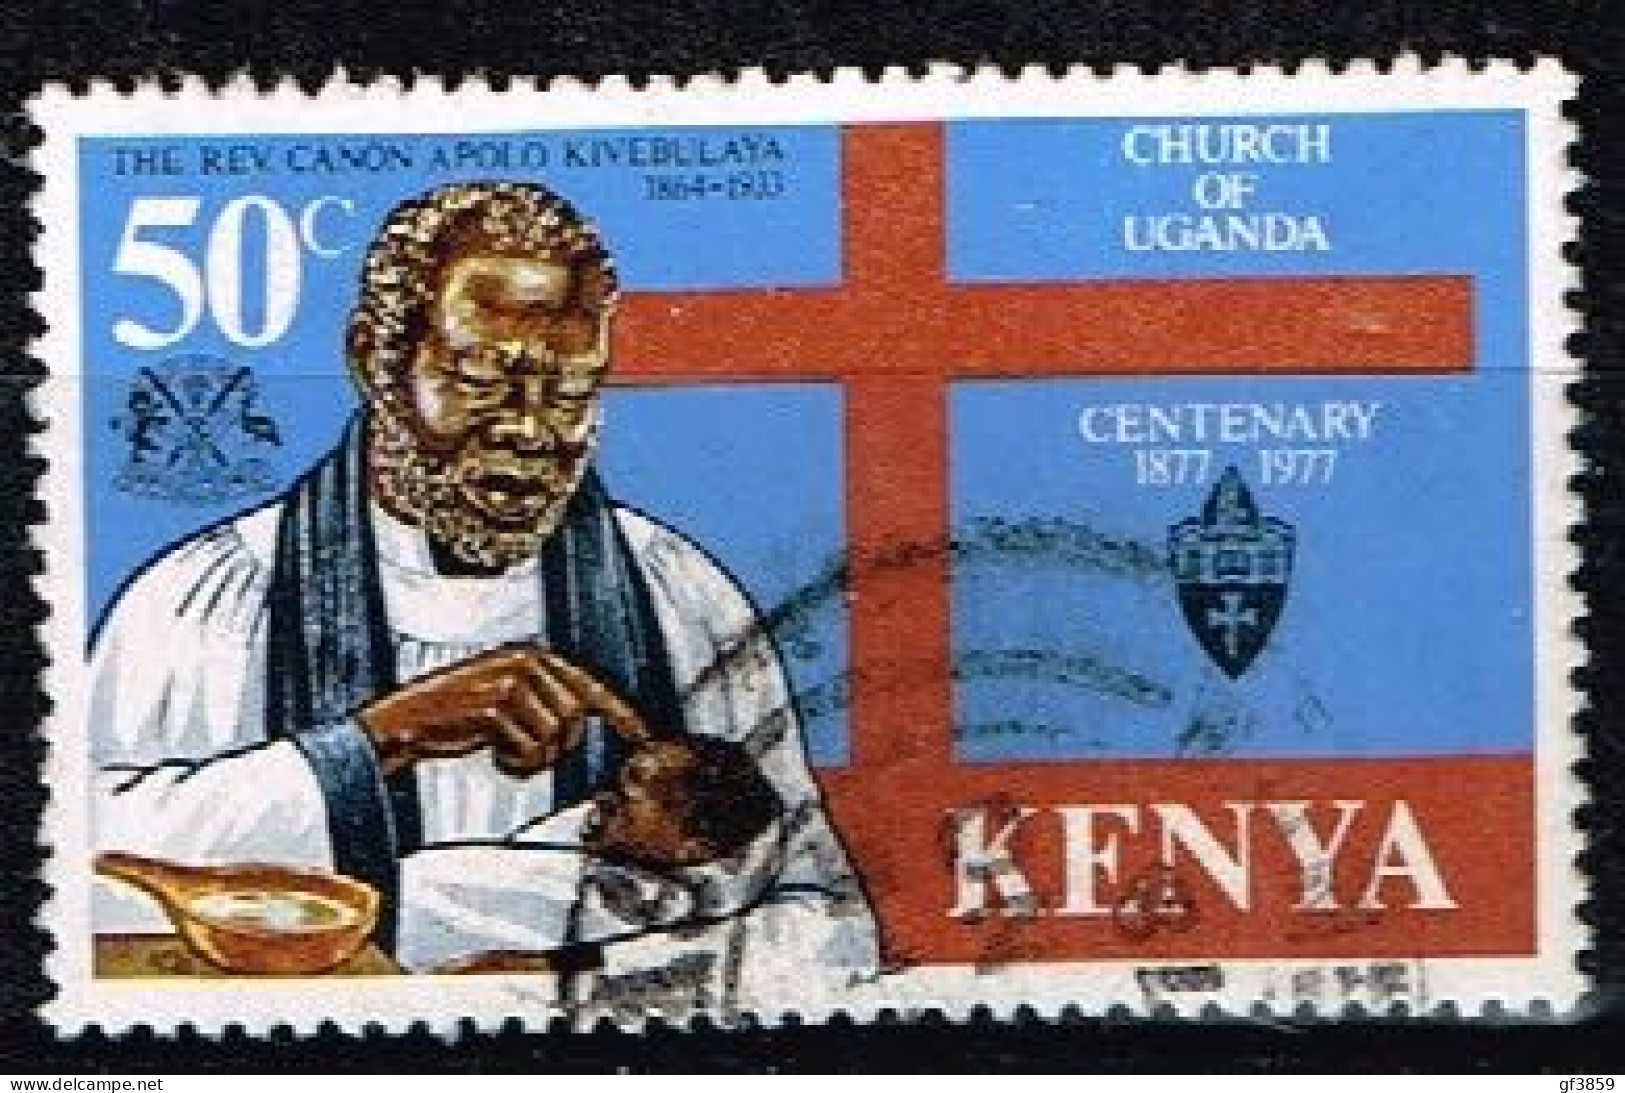 KENYA / Oblitérés/Used / 1977 - Centenaire De L'église D'Ouganda - Kenya (1963-...)